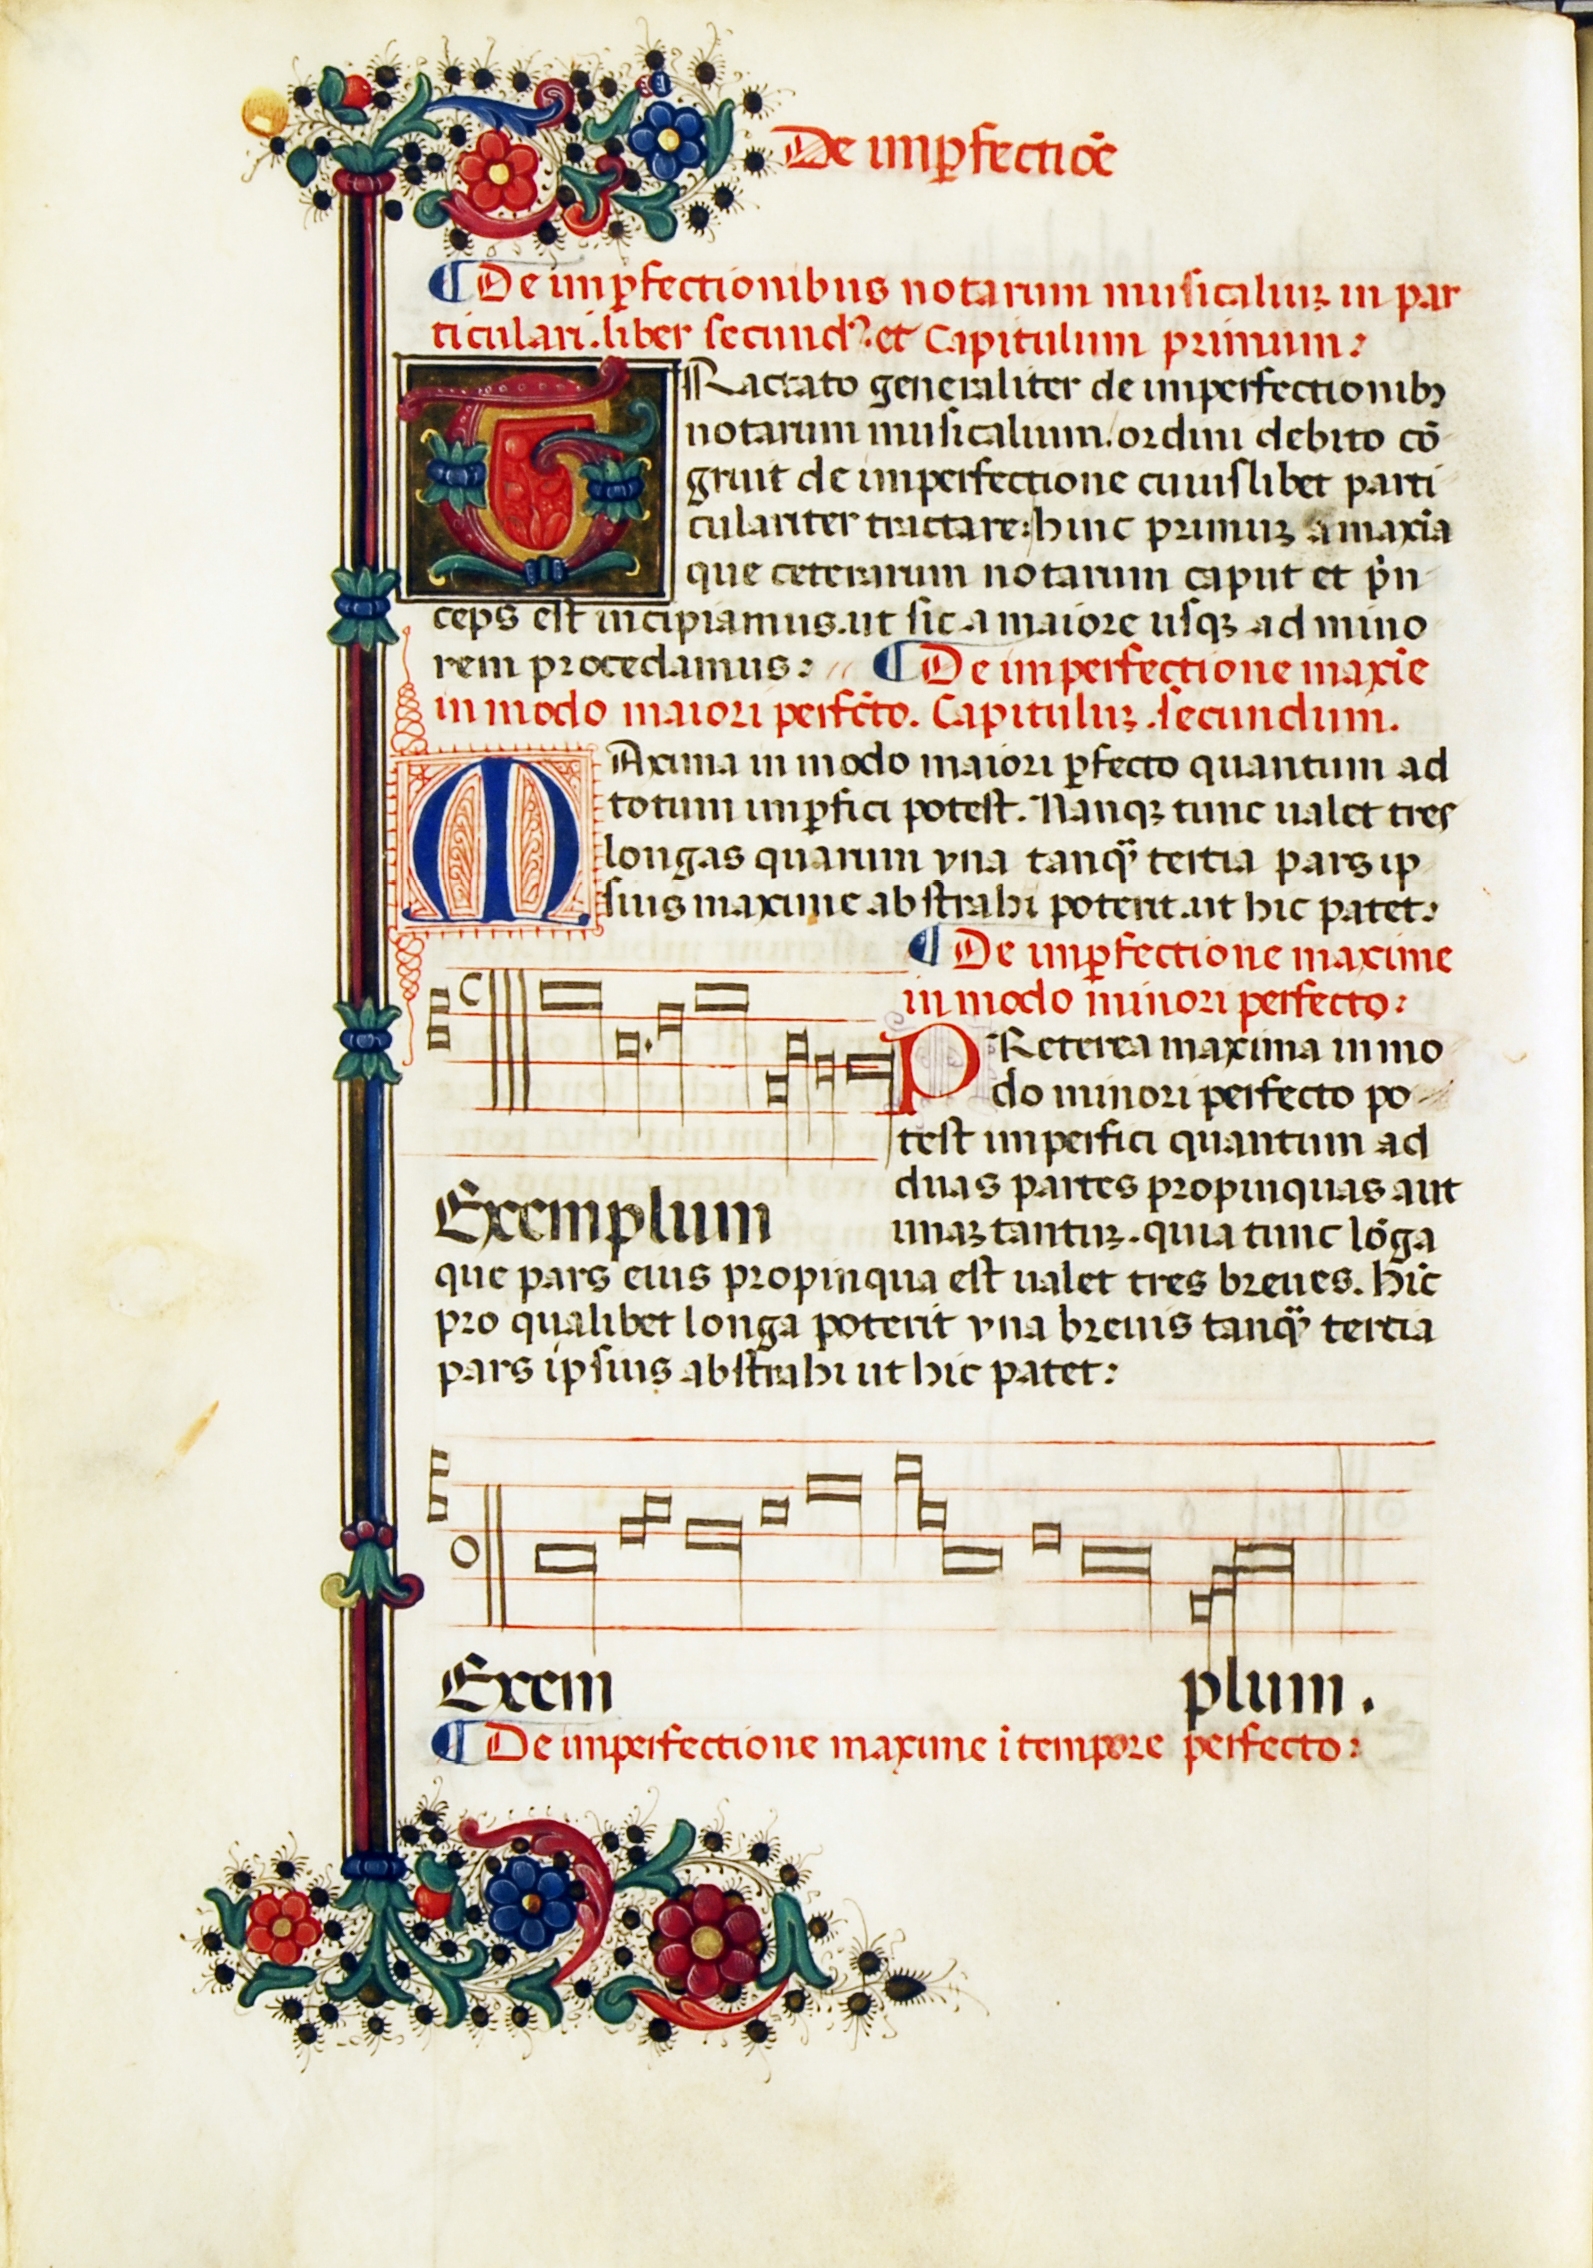 Bologna, Biblioteca Universitaria, MS 2573, fol. 68v. Source: Biblioteca Universitaria, Bologna.